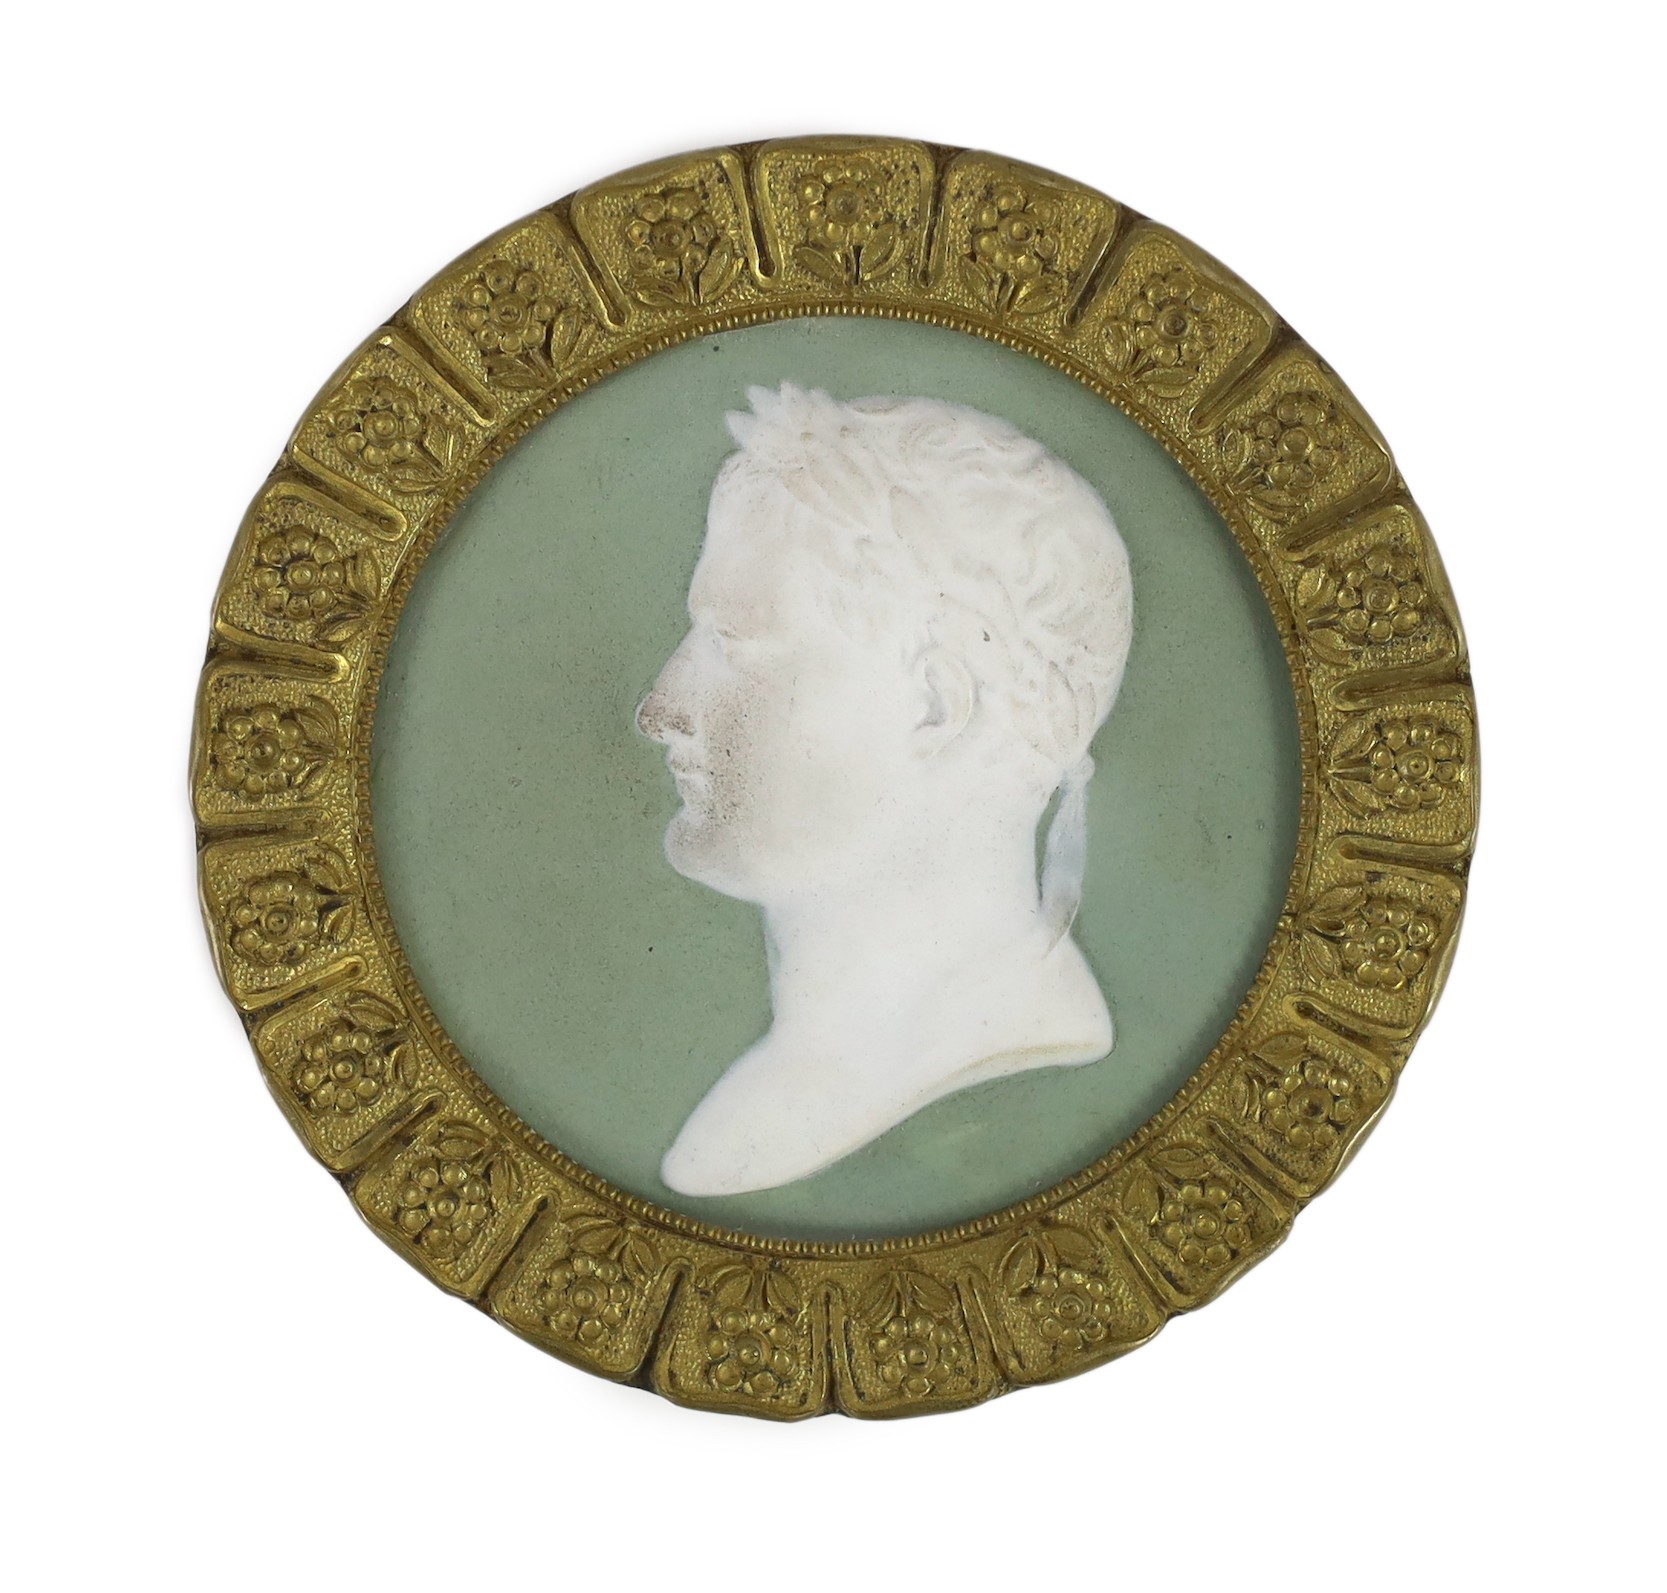 A 19th century French bisque plaque of Napoleon, diameter 14cm